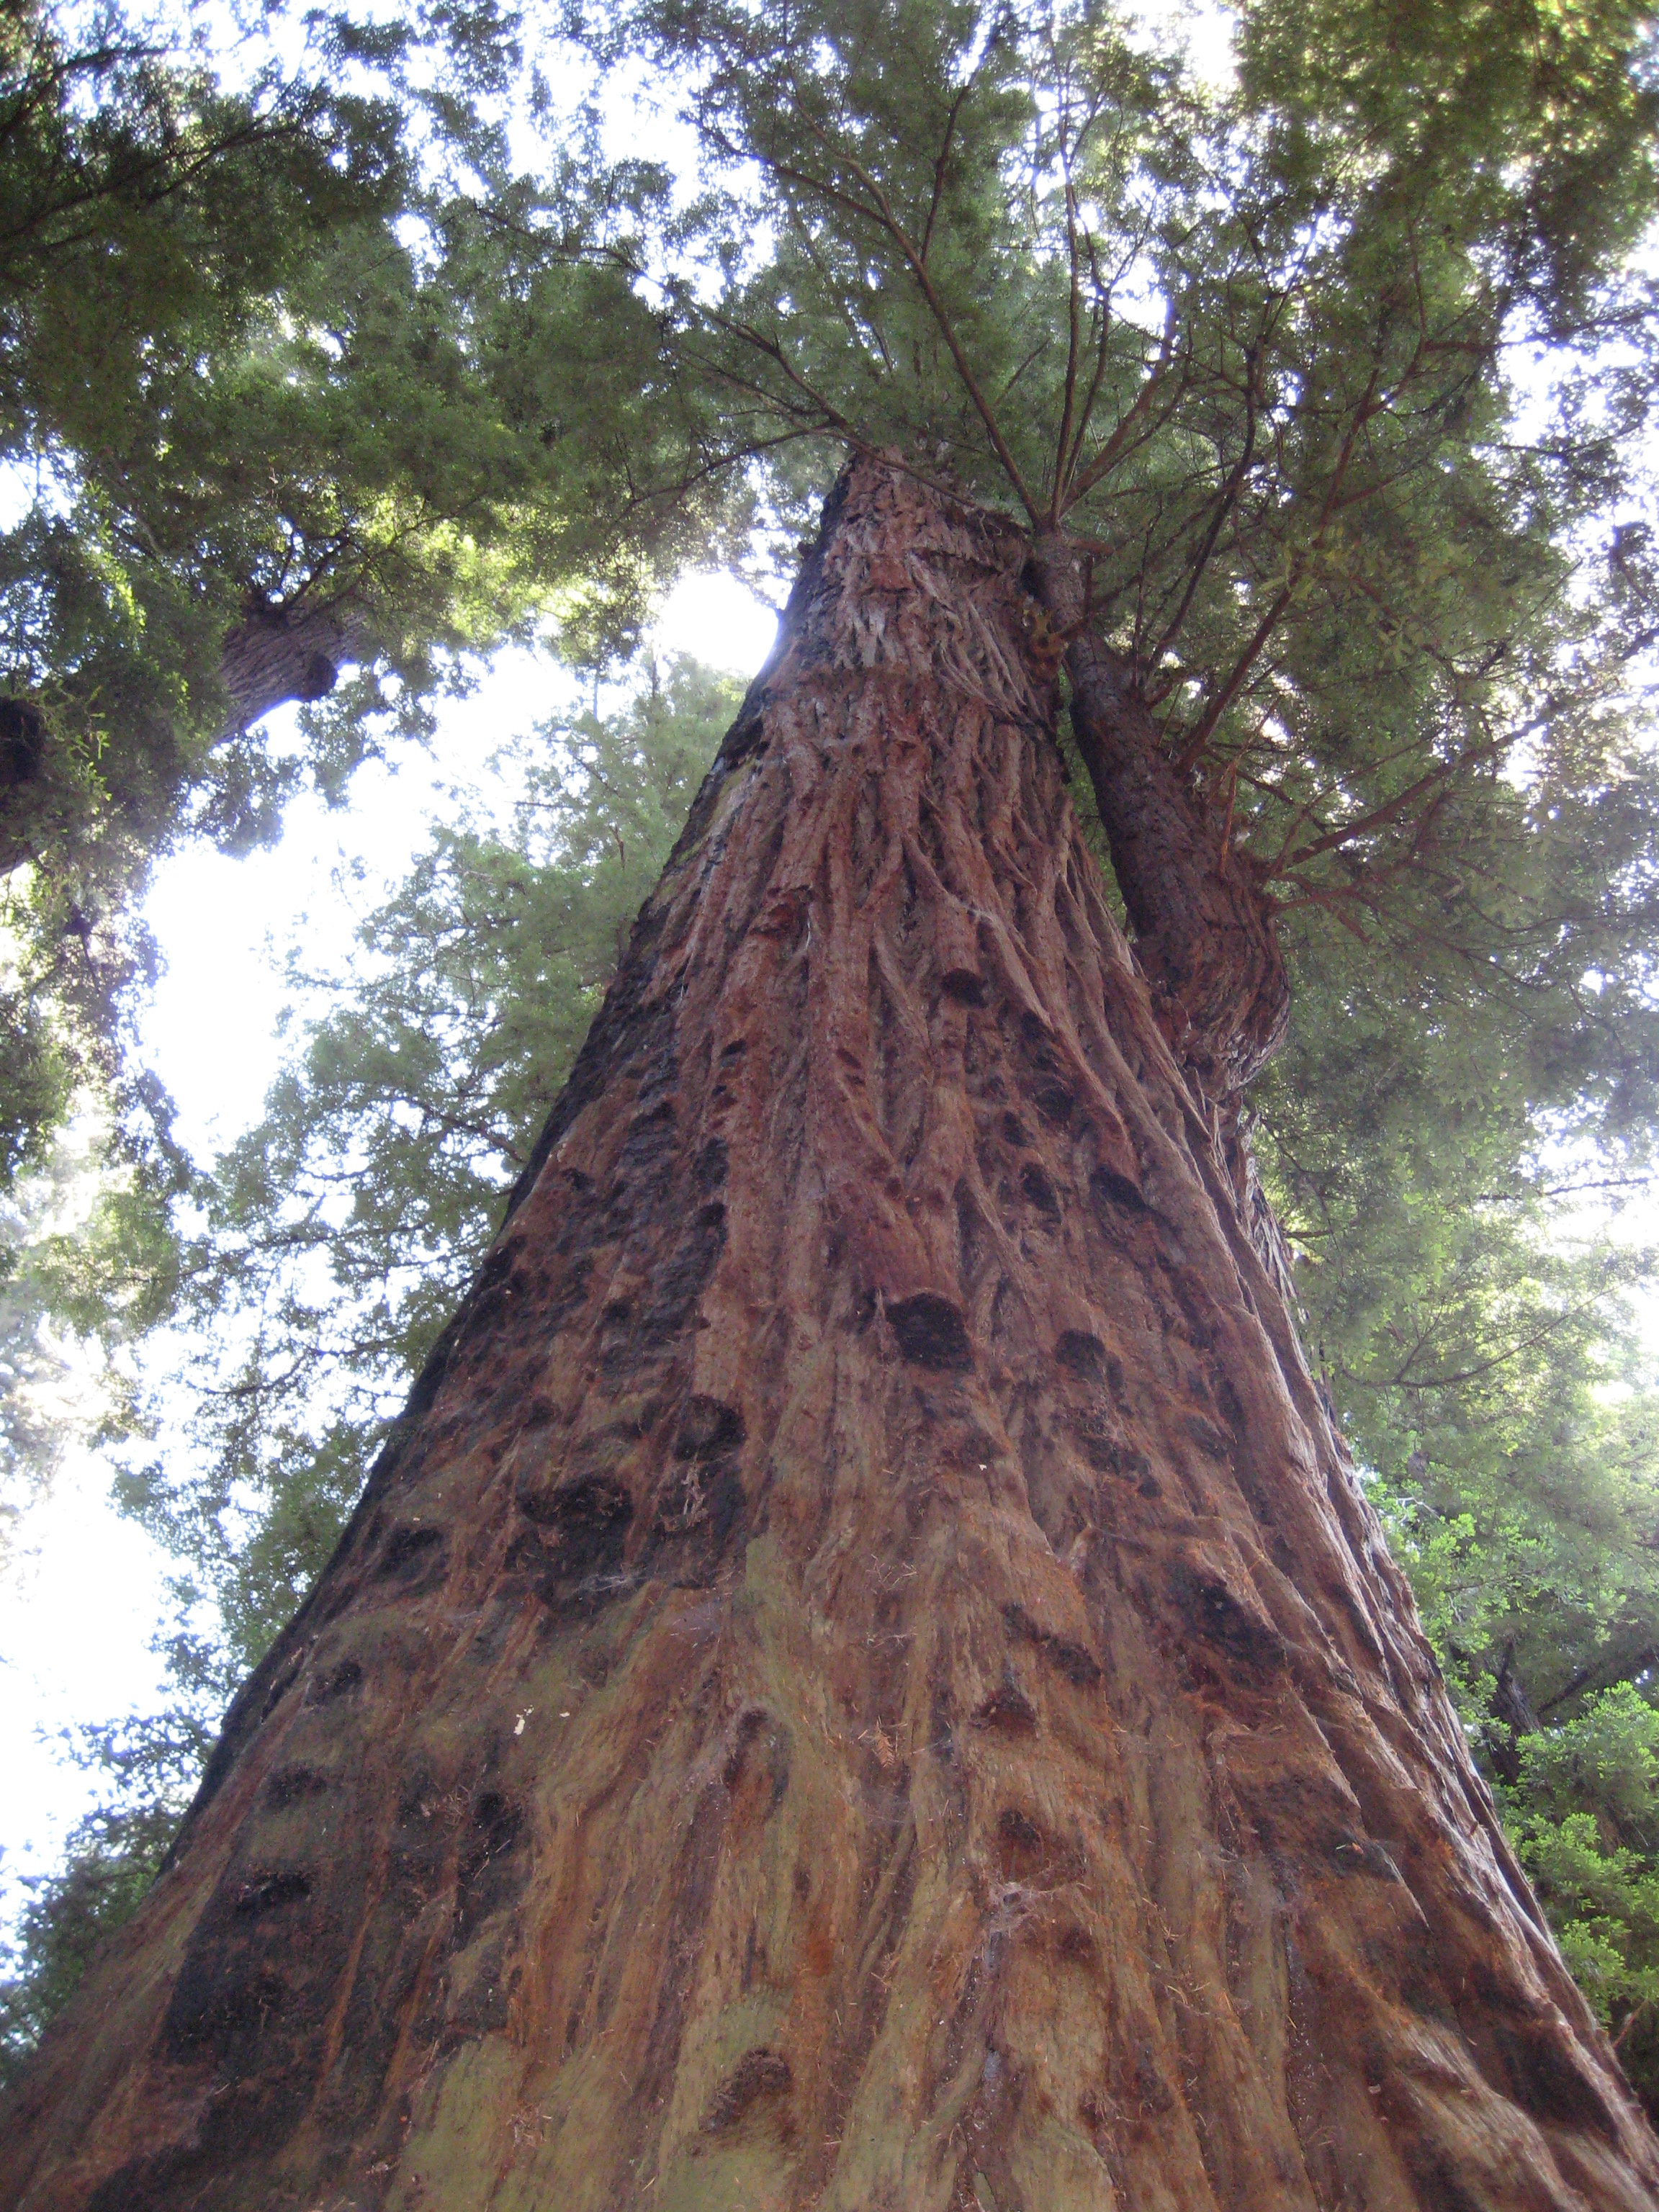 A towering redwood tree in the Santa Cruz Mountains.